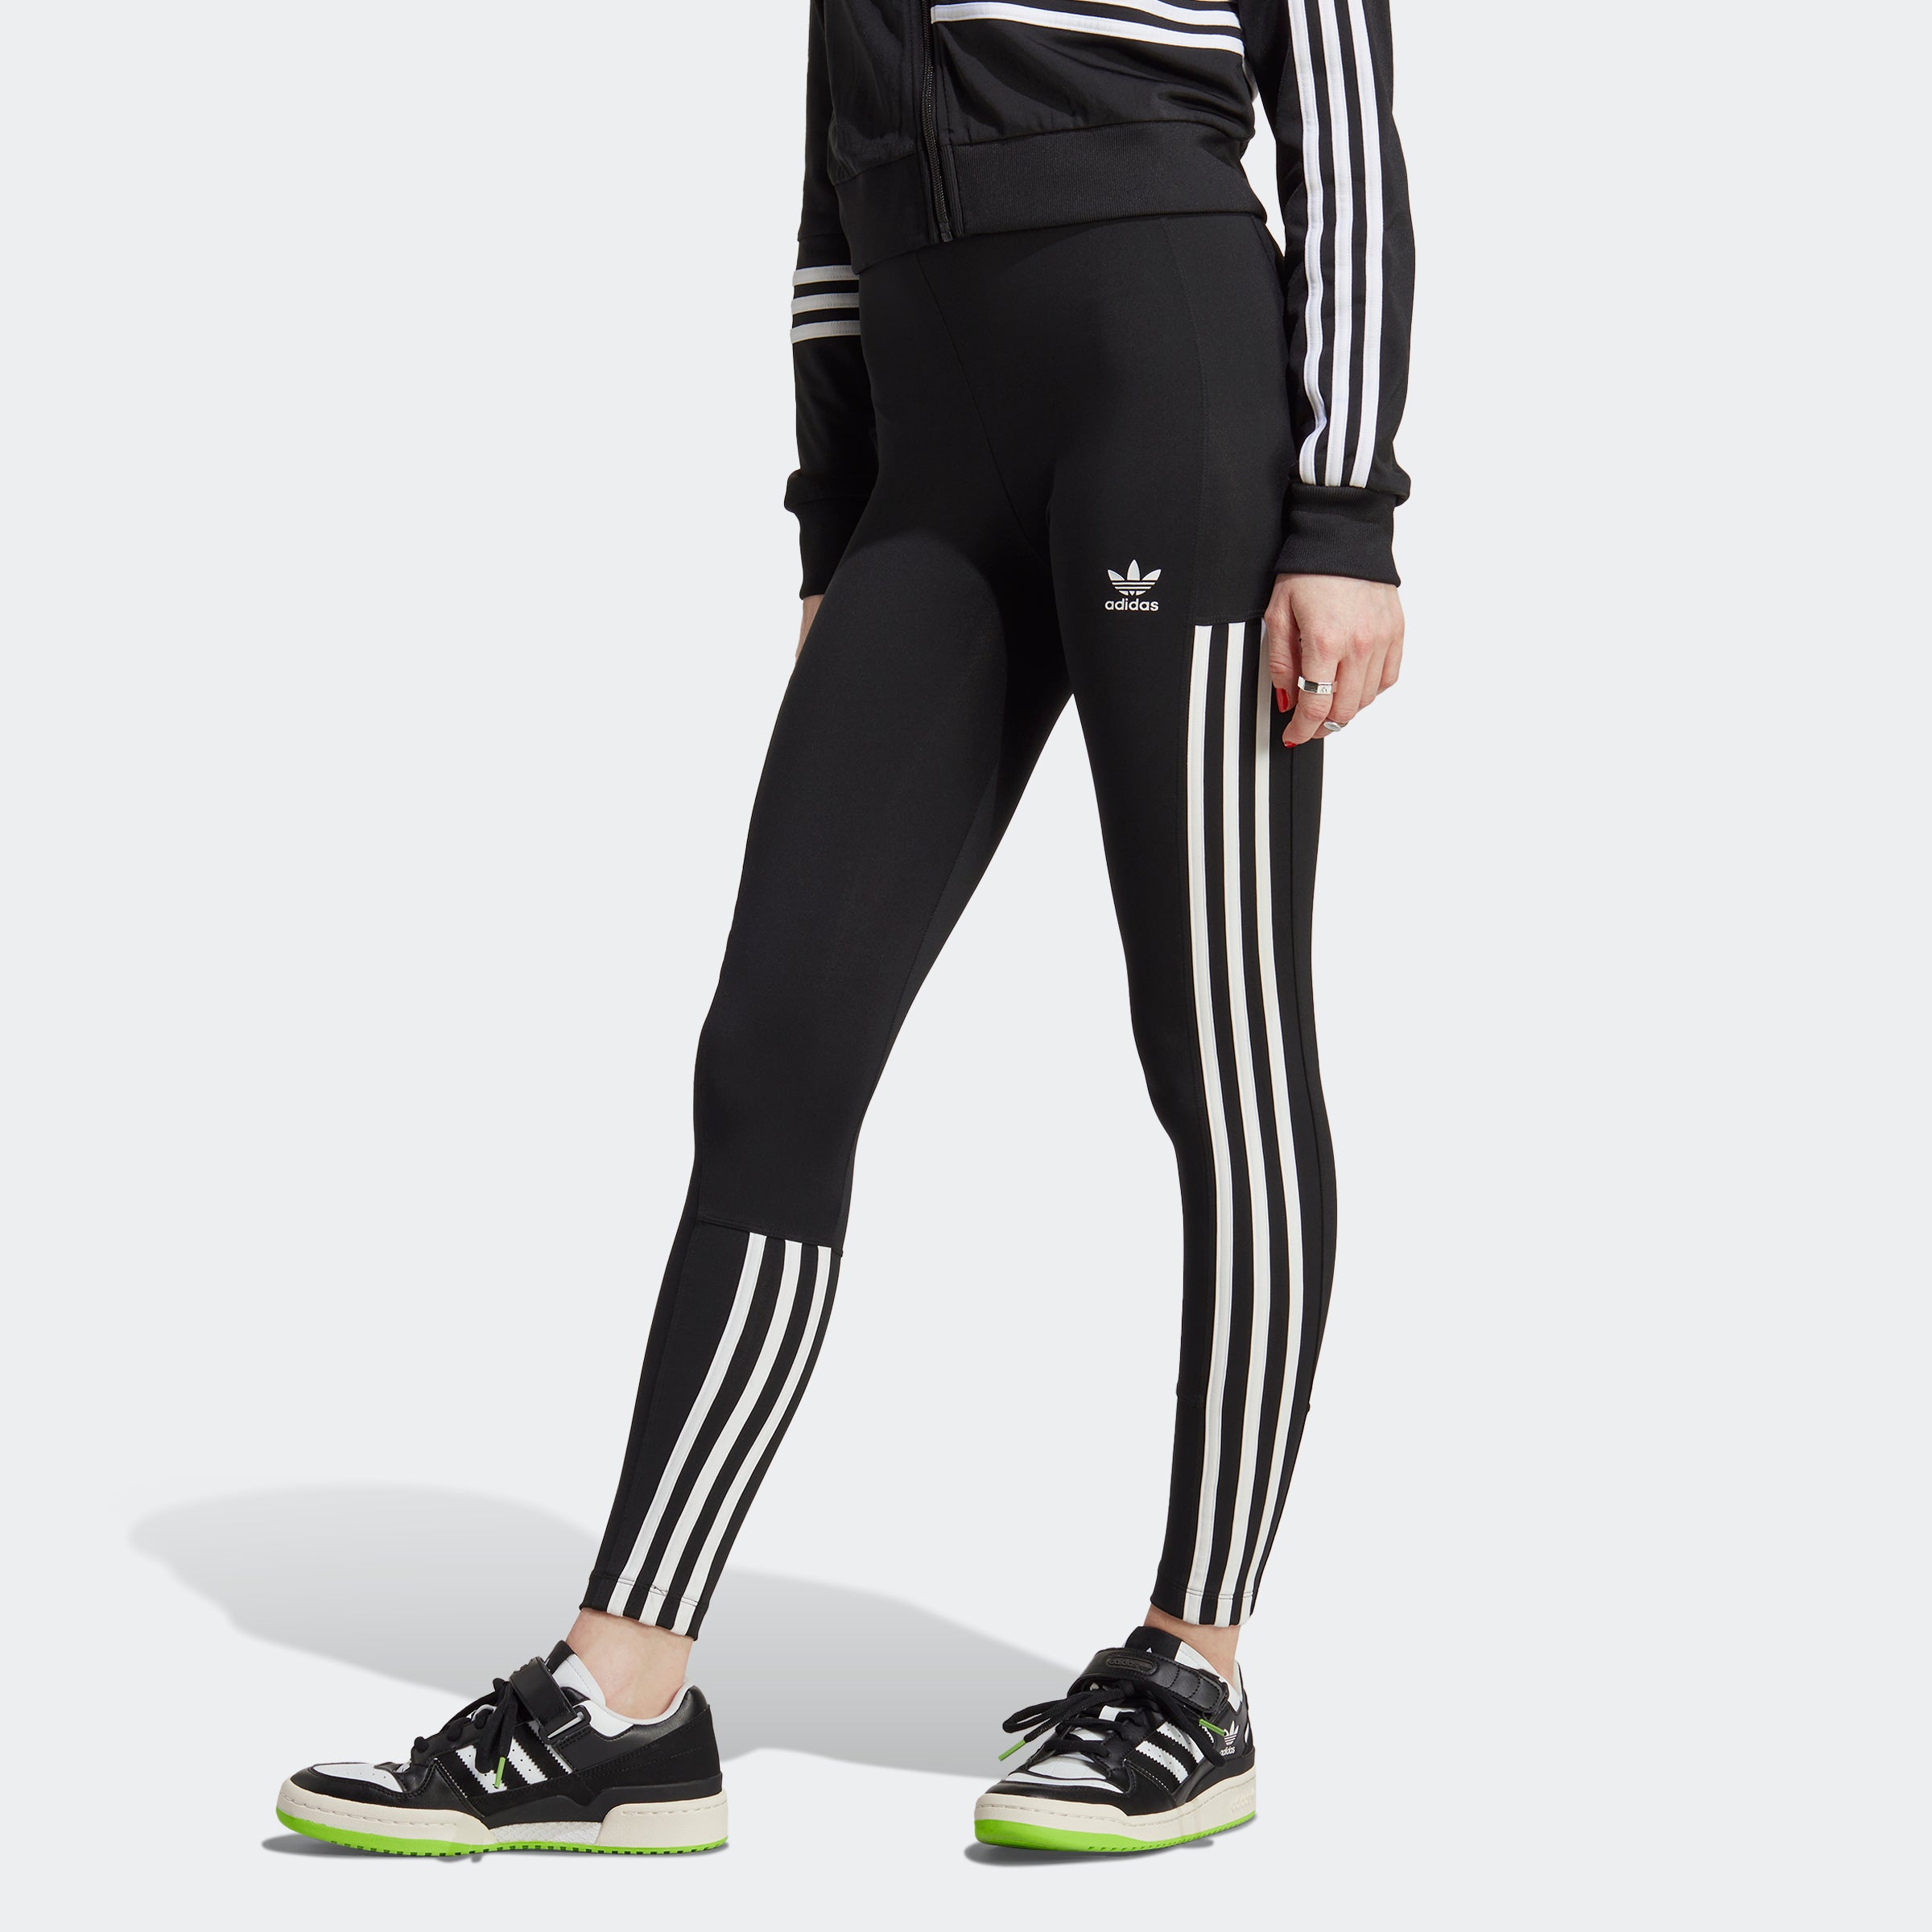 Adidas Women's 3 Stripe 7/8 Tights (Black/White, Size L)